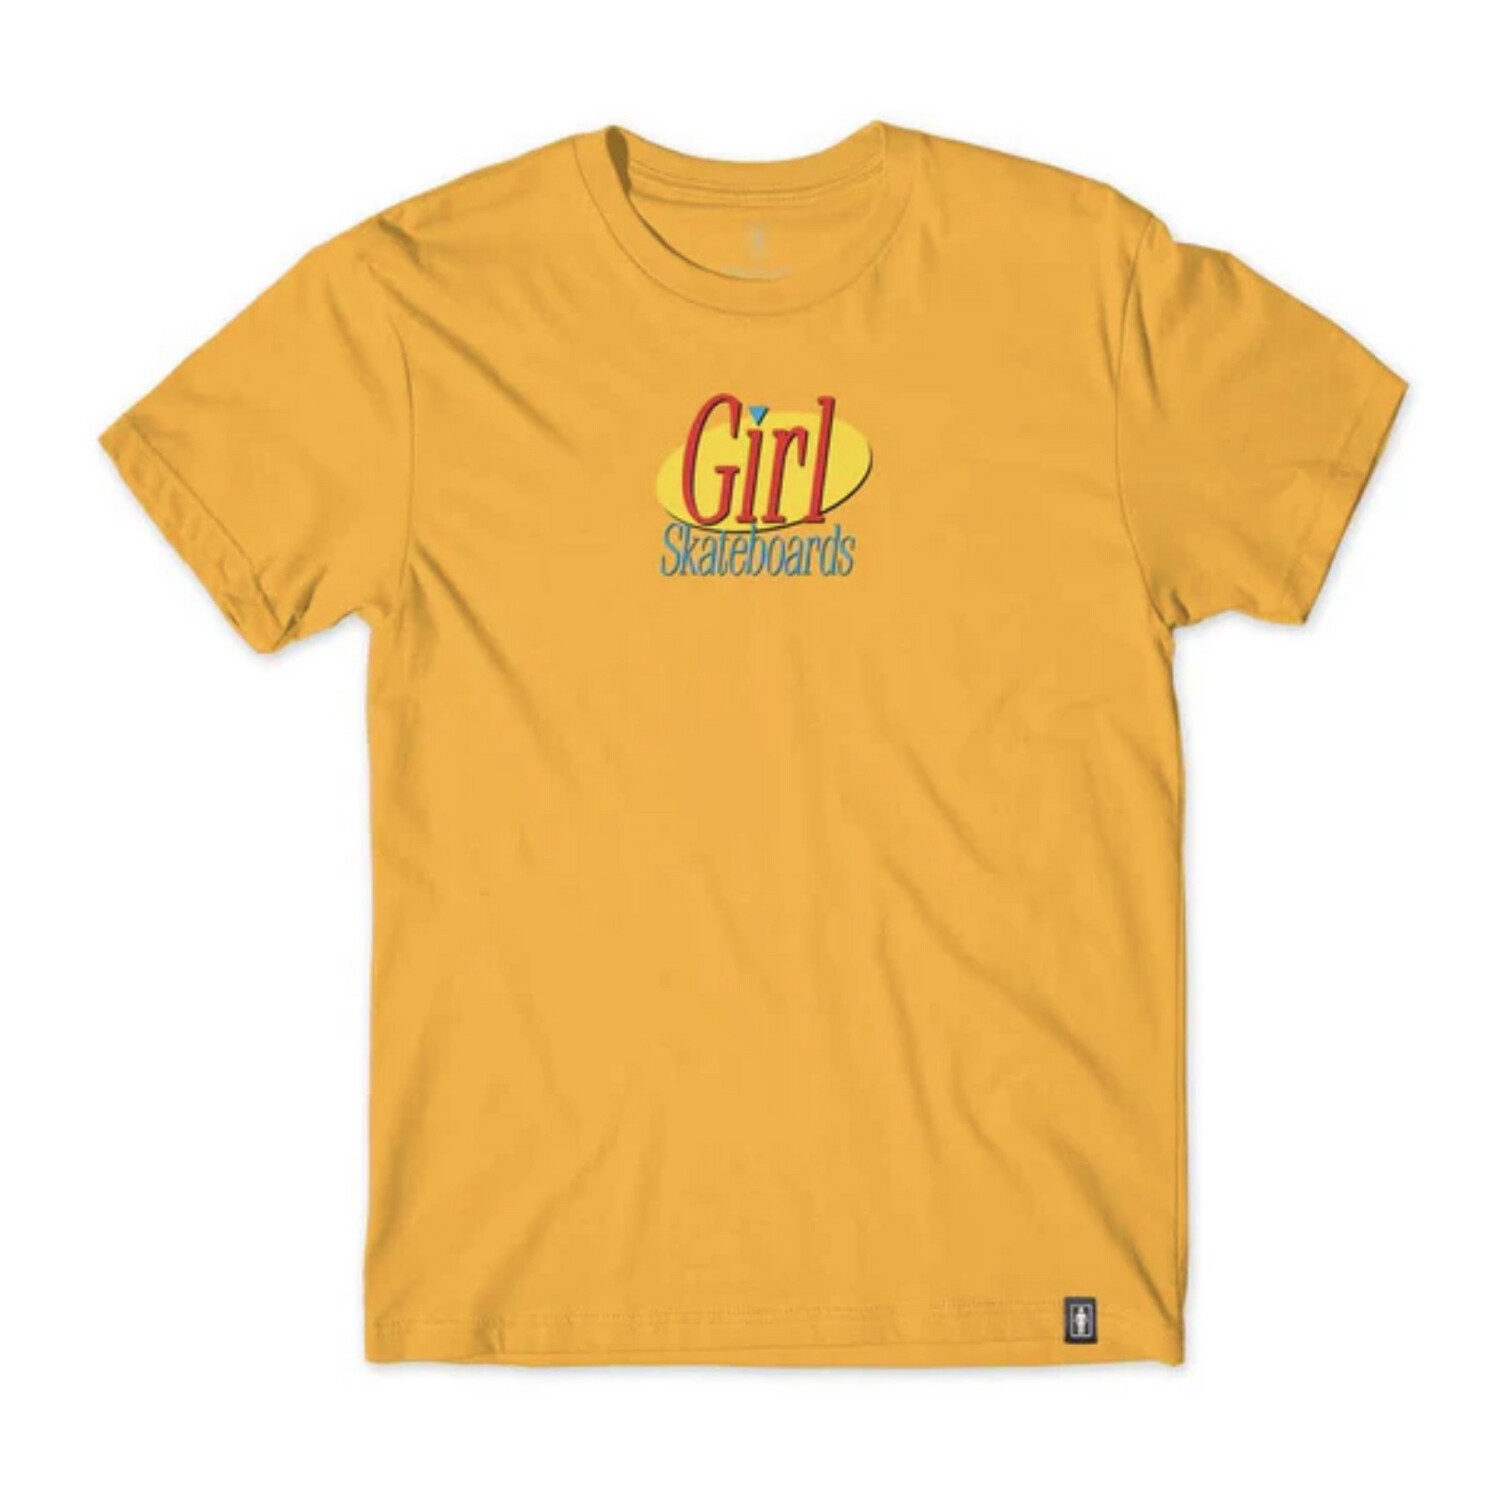 “Gasman” - Girl Skateboards T shirt